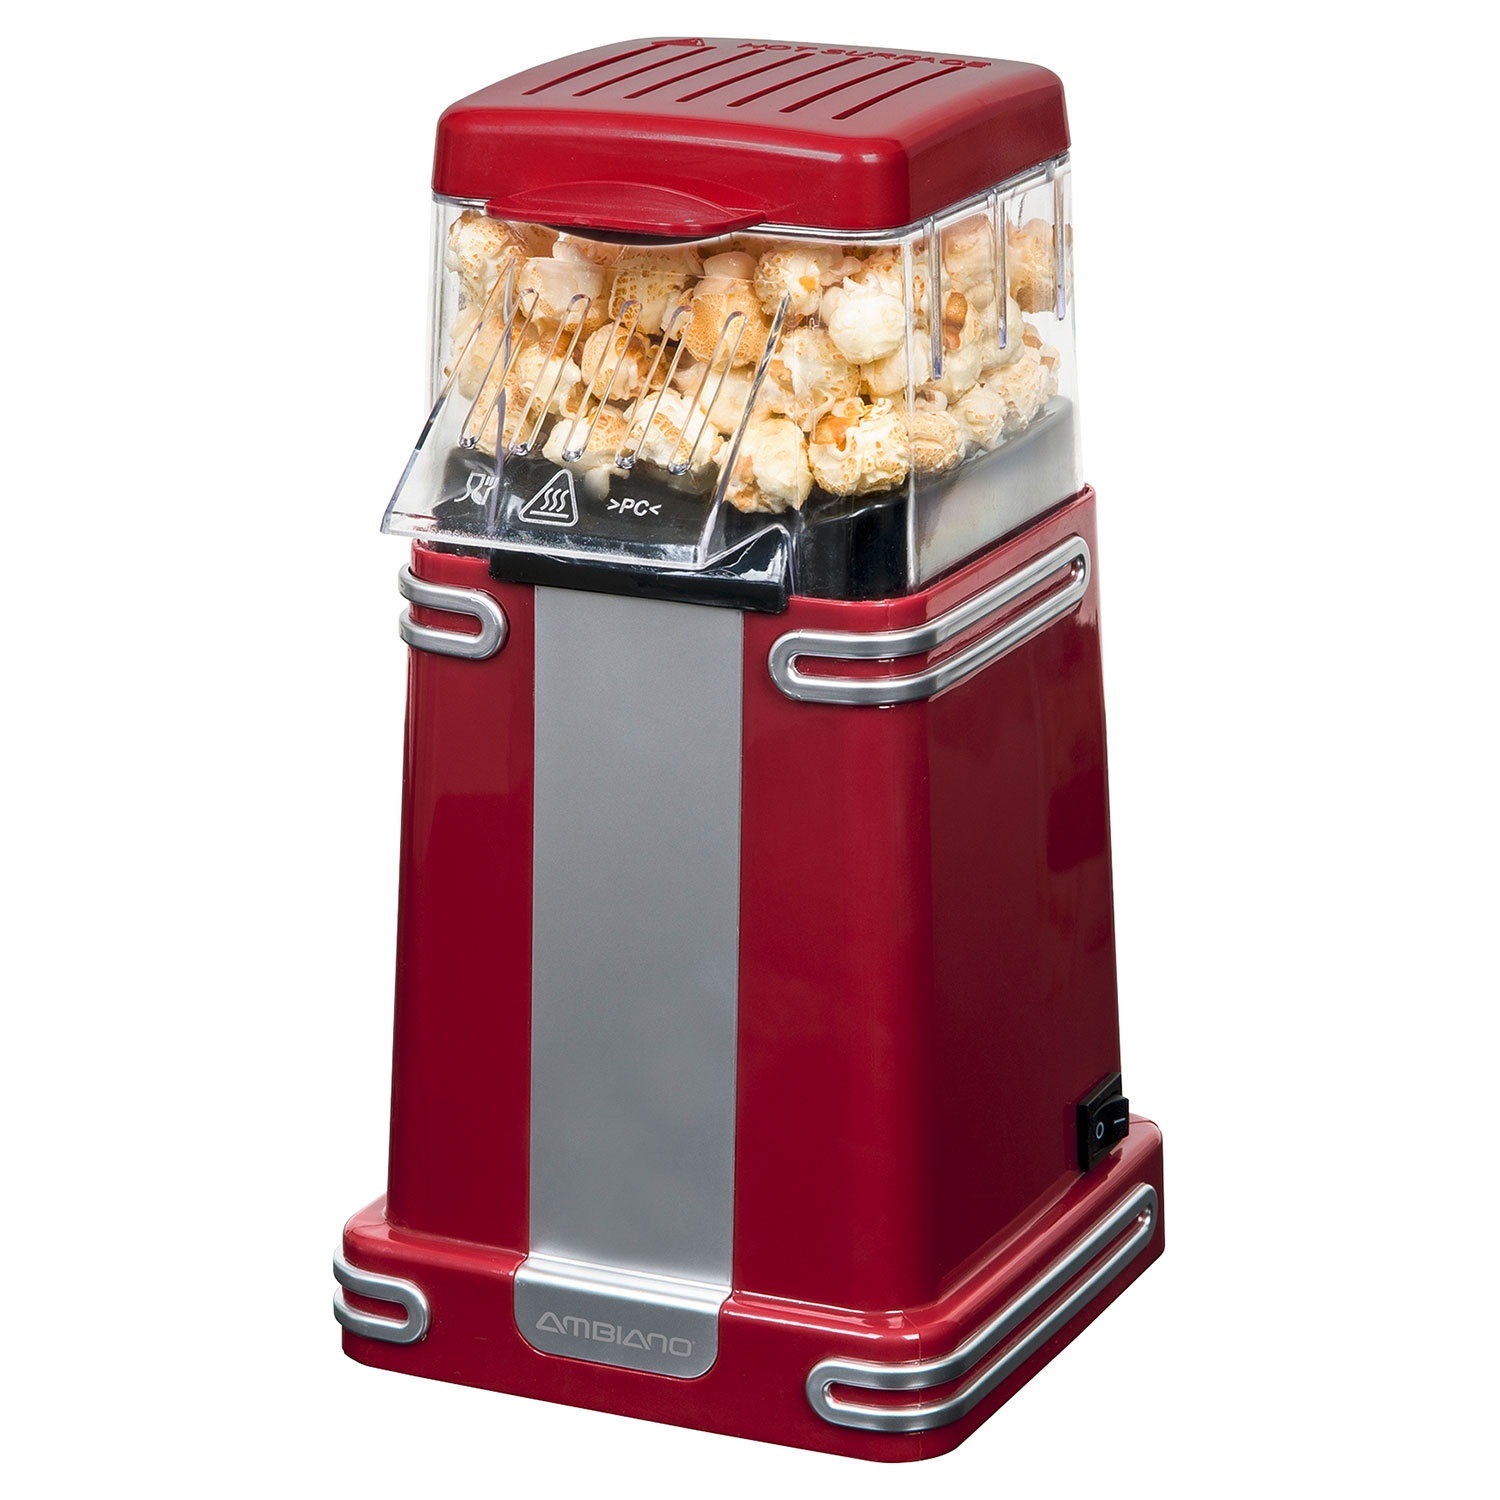 AMBIANO Schokobrunnen oder Popcornmaschine